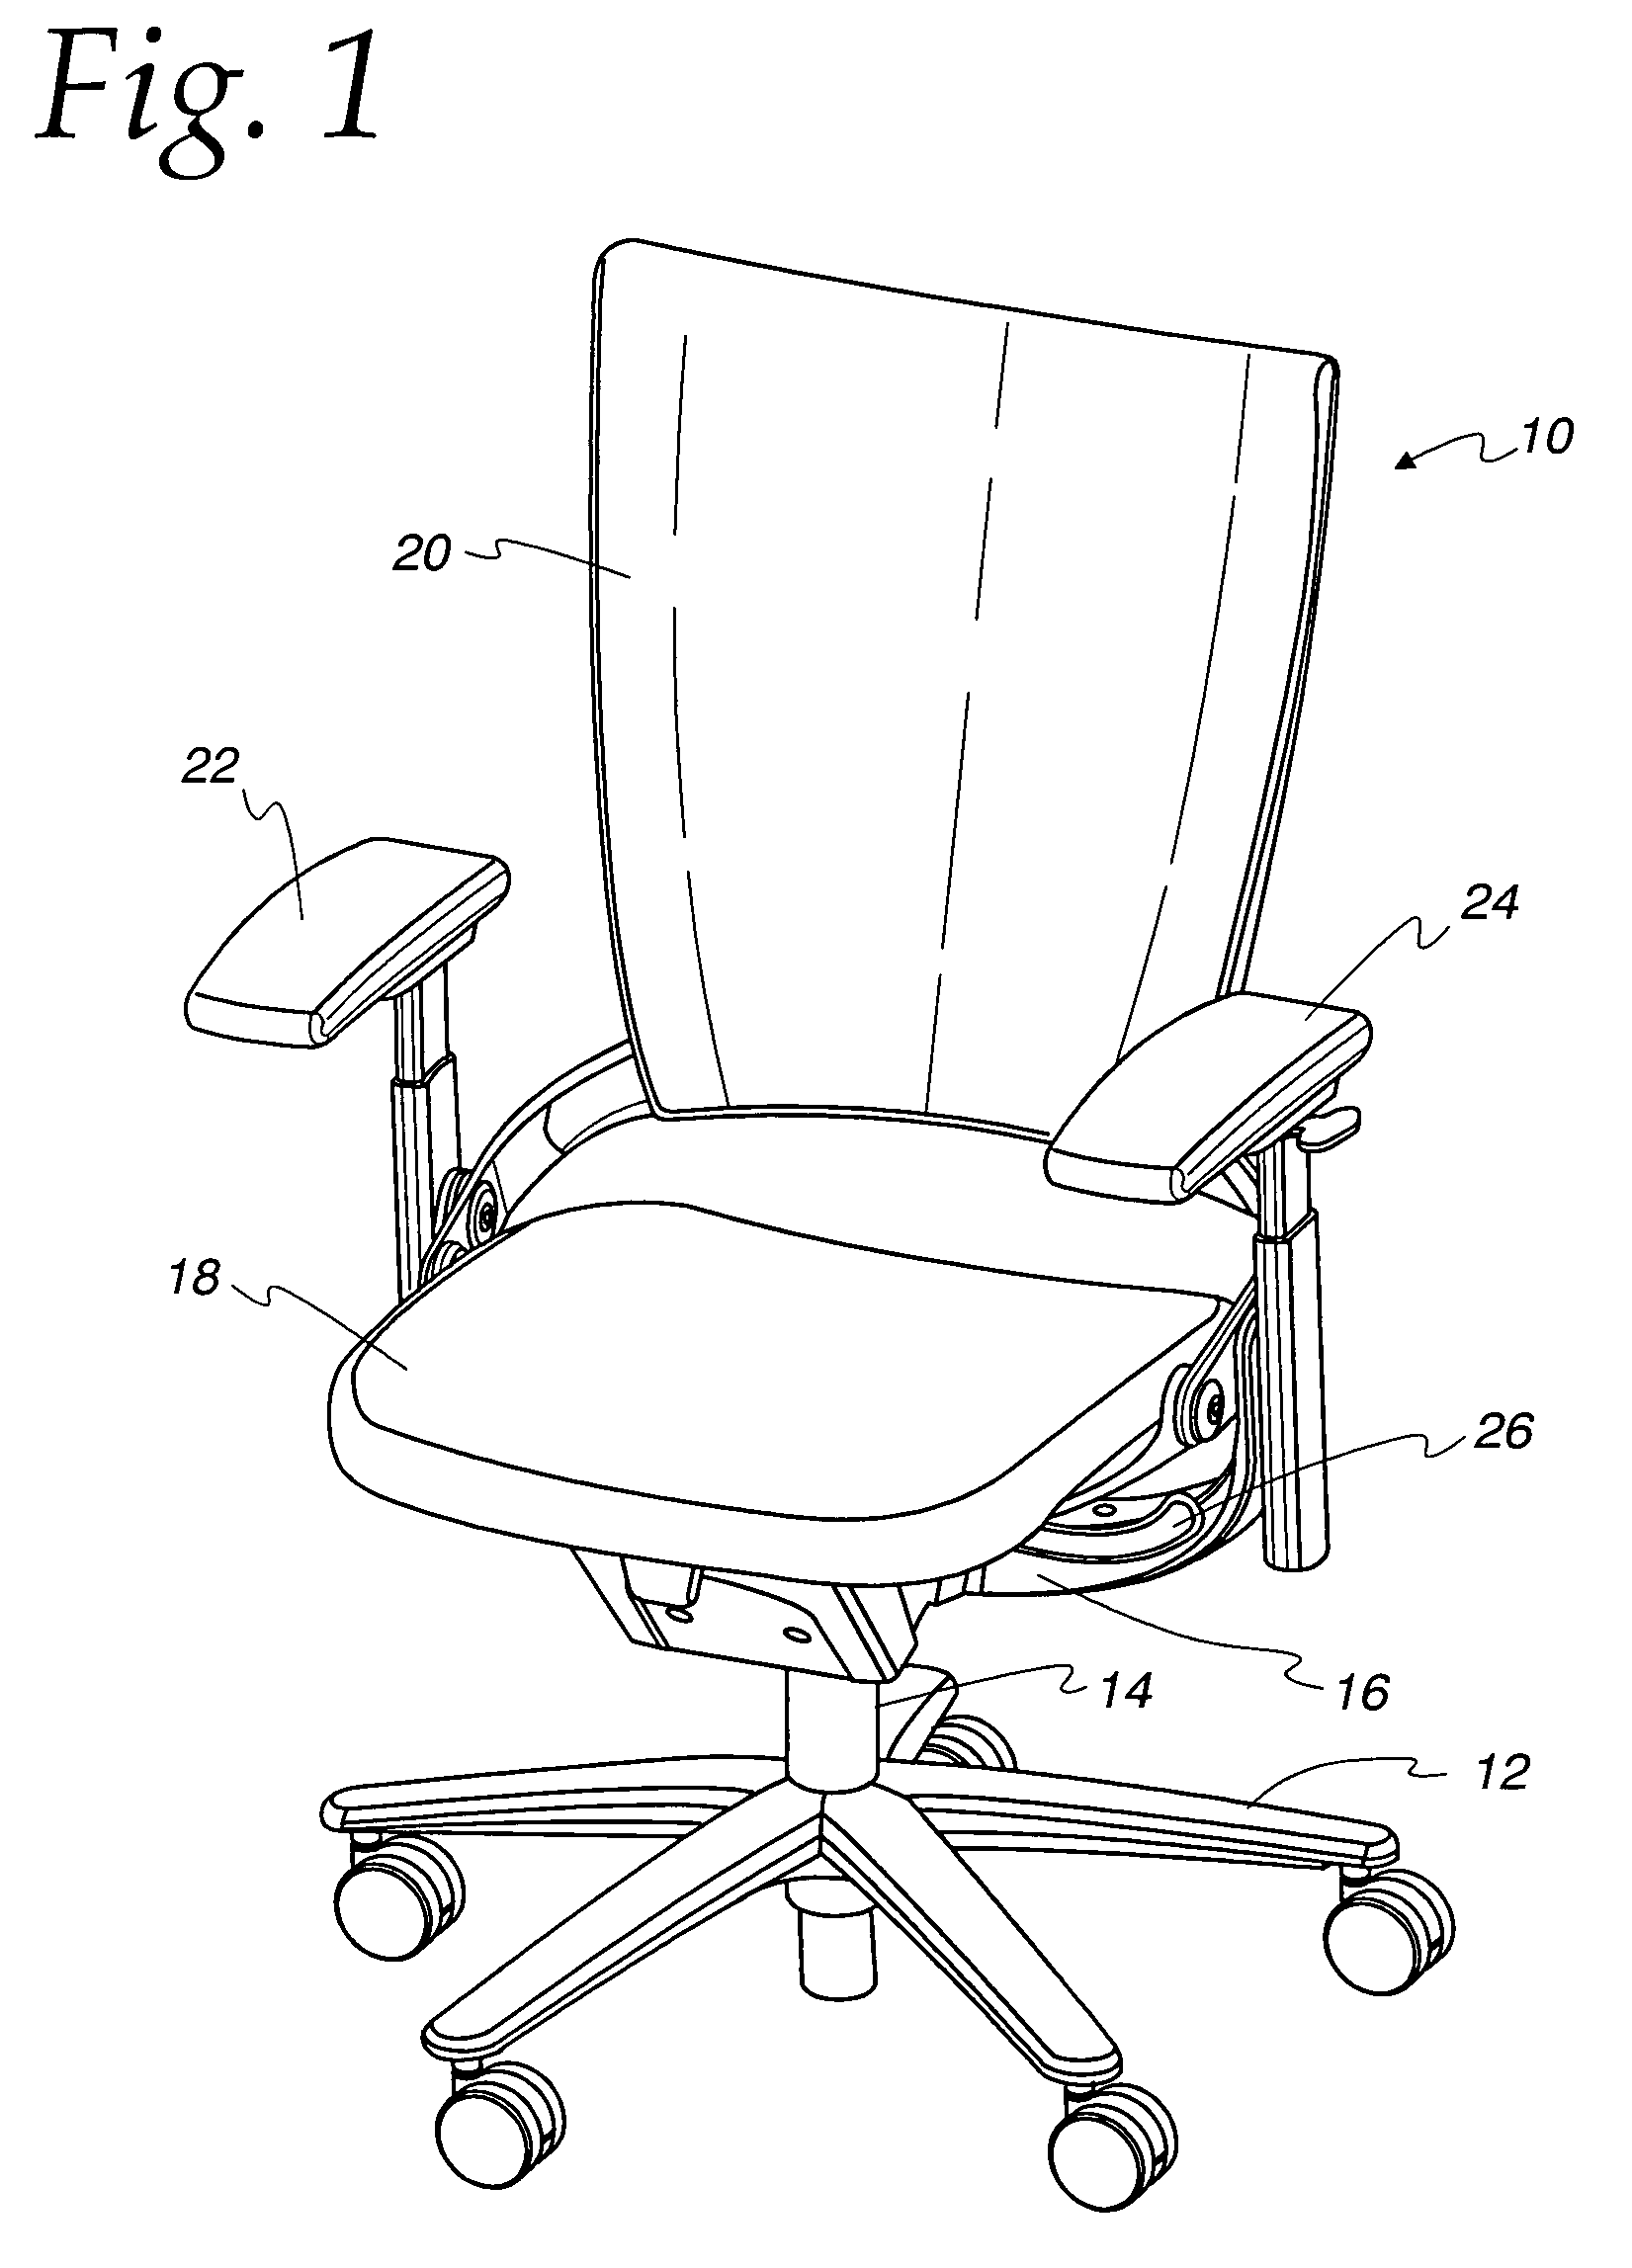 Vertically adjustable chair armrest